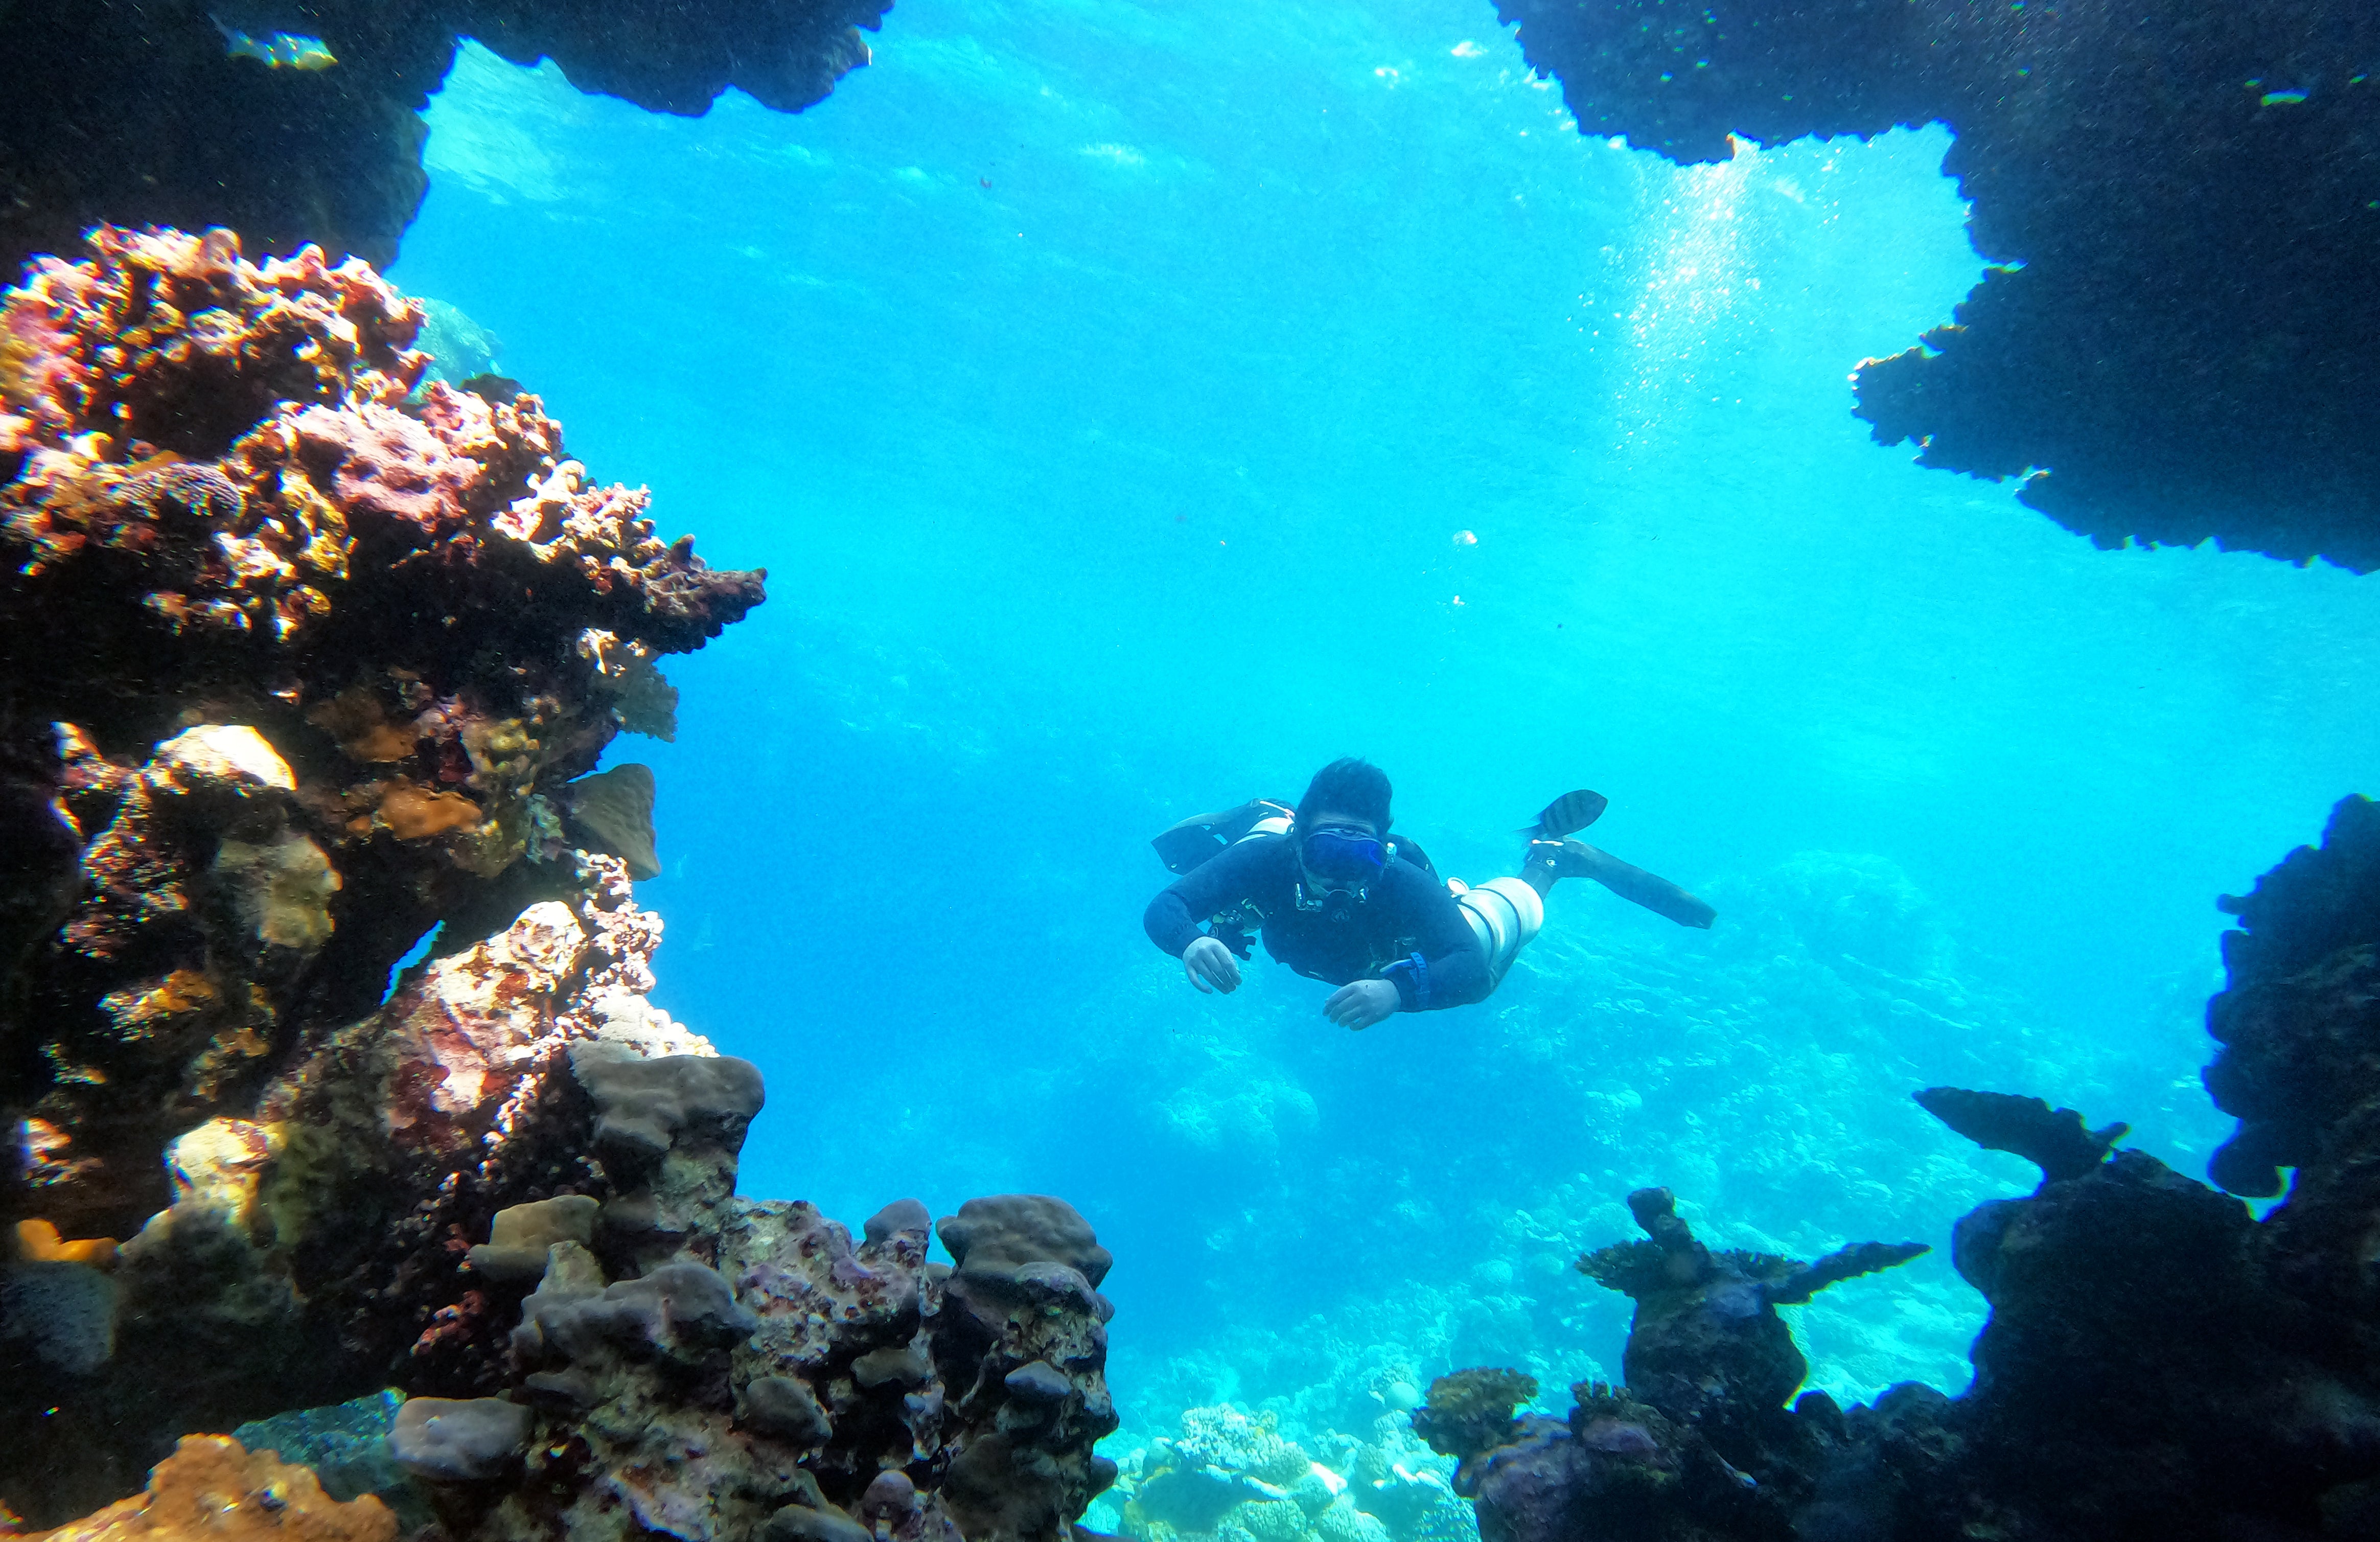 Sidemount diving - something for you?